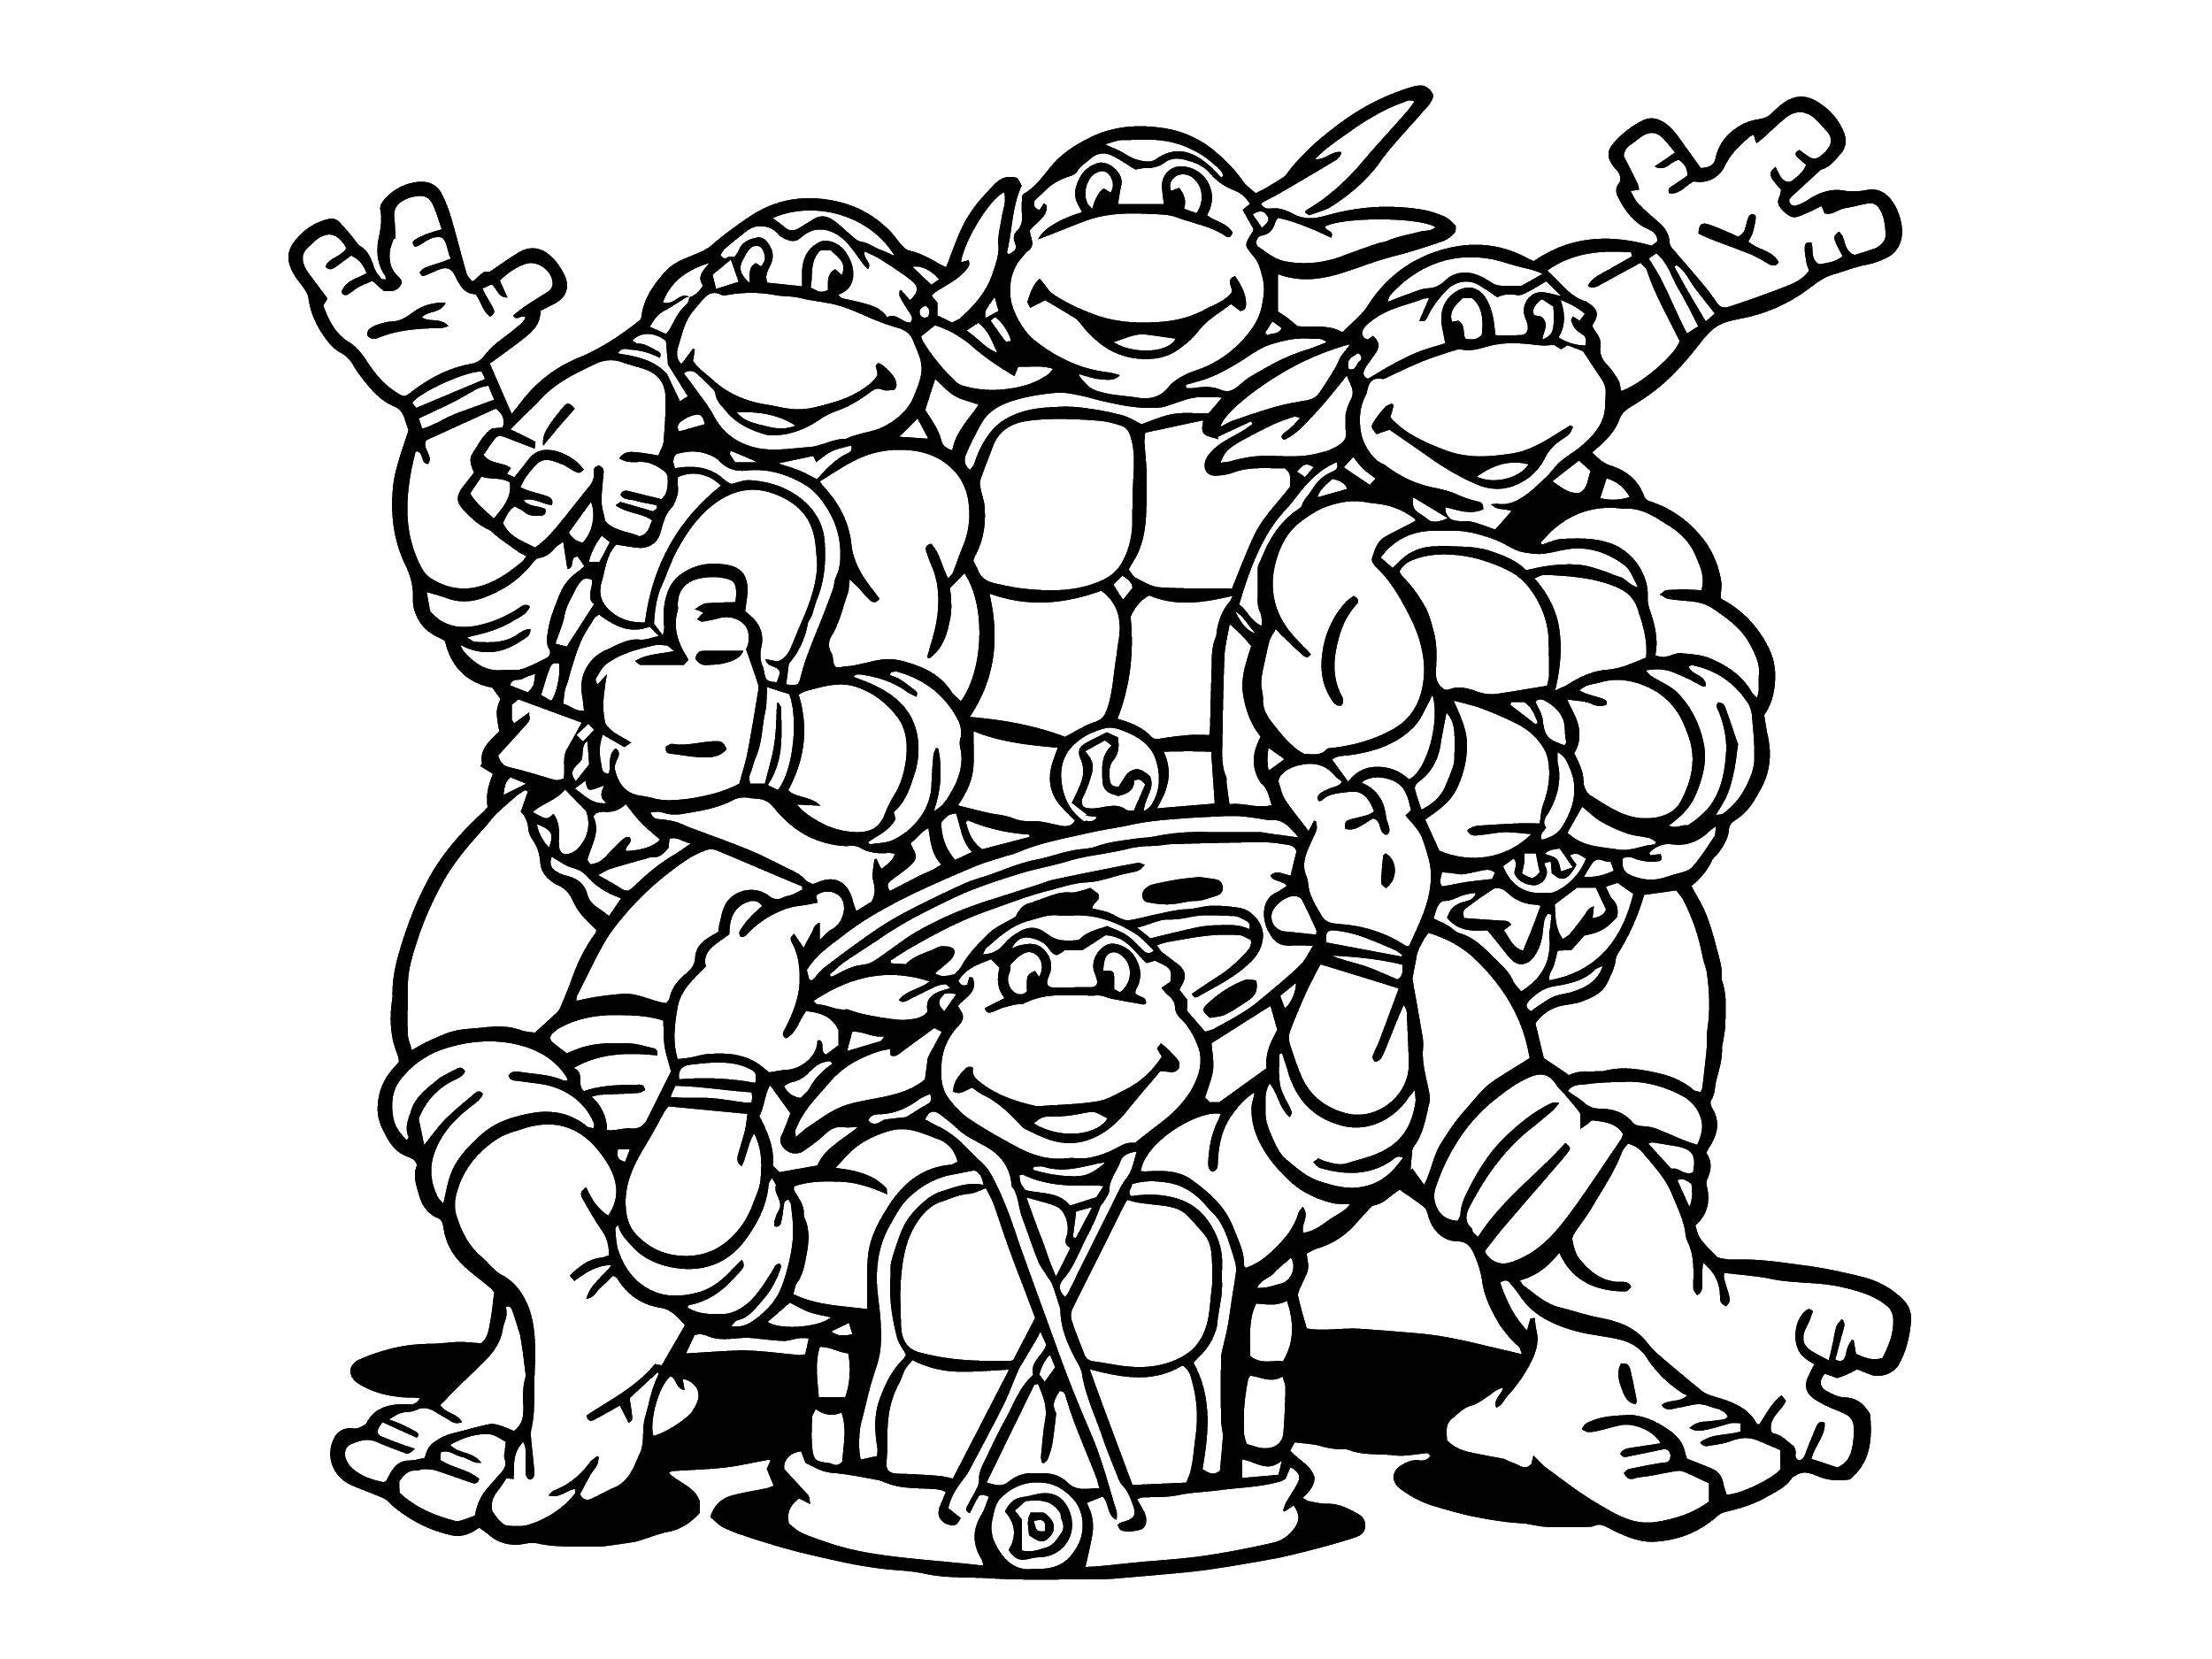 Coloring Teenage mutant ninja turtles. Category teenage mutant ninja turtles. Tags:  turtles, ninja turtles, cartoons.